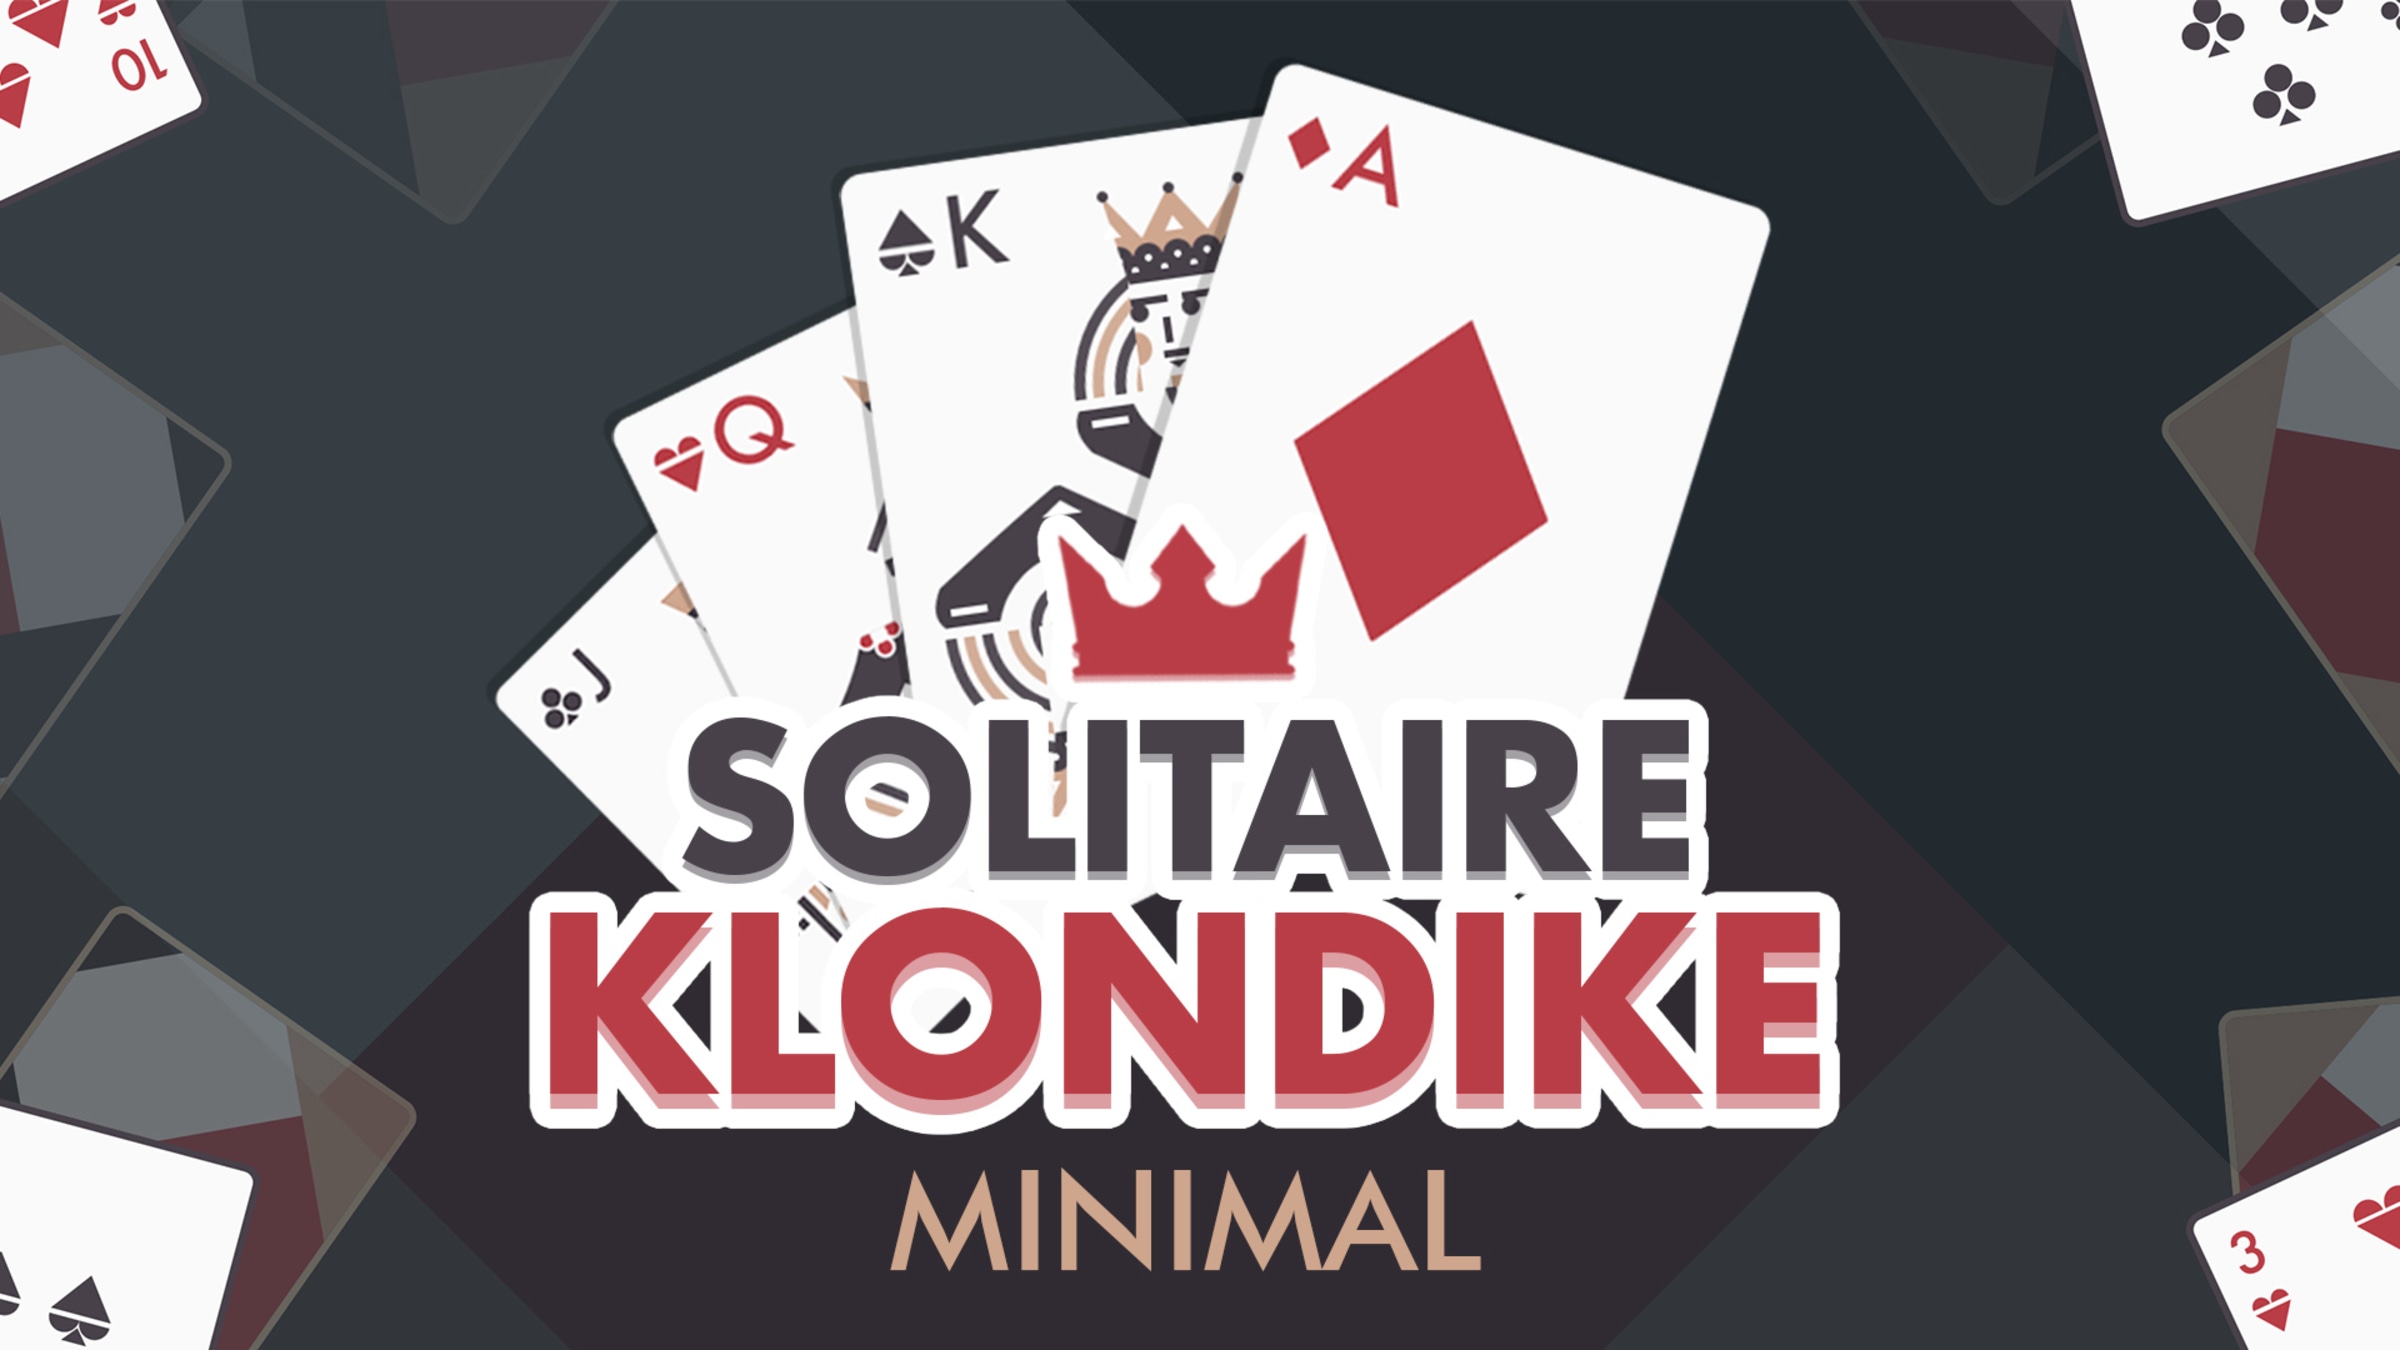 Solitaire Klondike Minimal - Nintendo Official Site